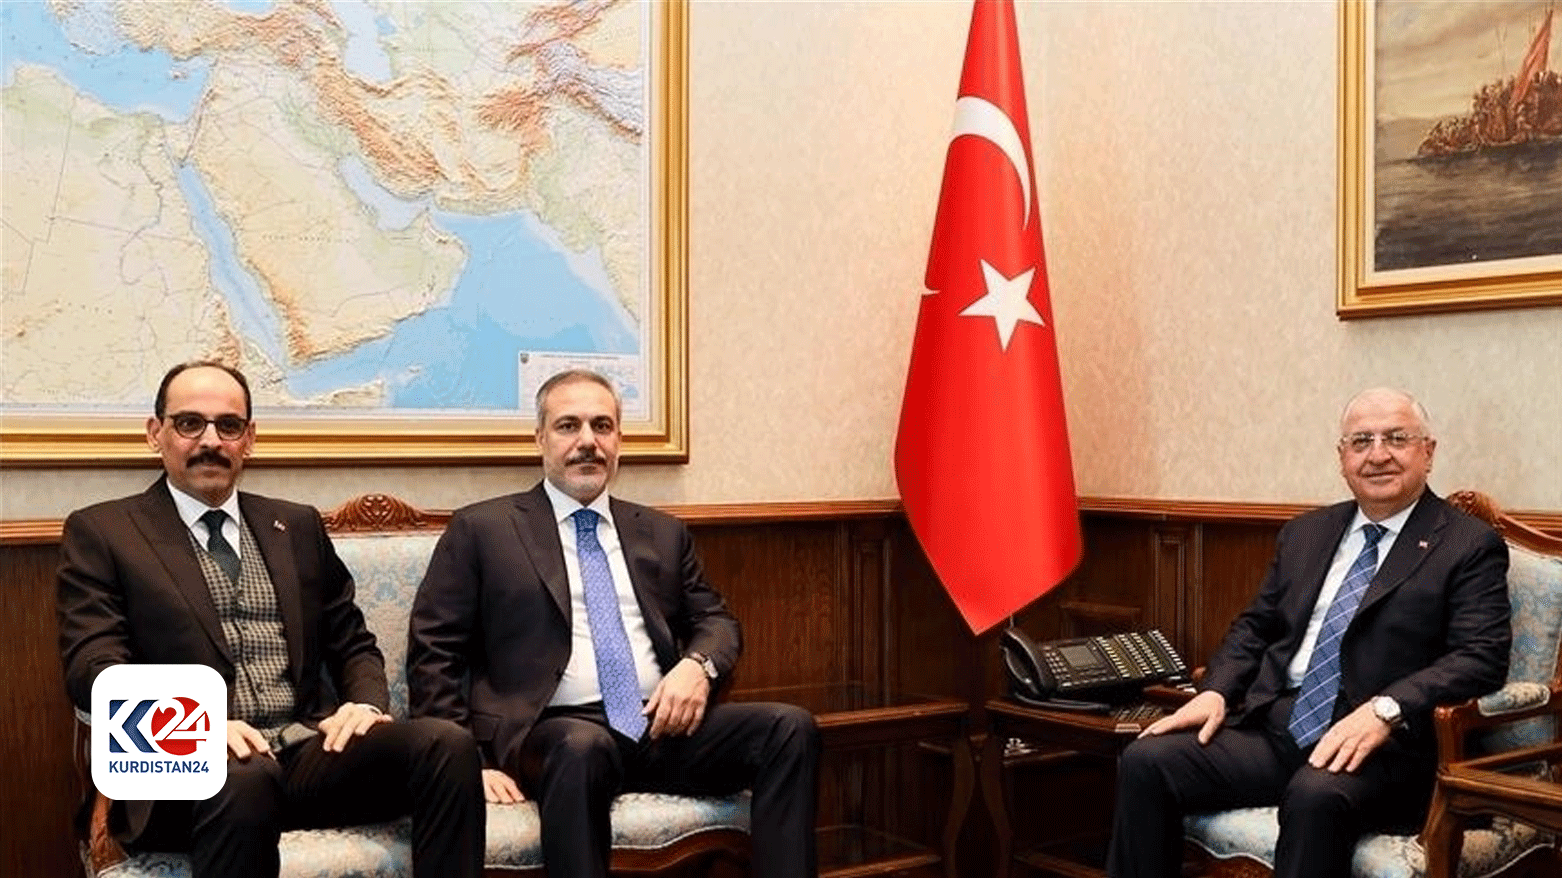 Turkish Foreign Minister Hakan Fidan (second from left), Defense Minister Yaşar Güler (right) and Director of the National Intelligence Organization of Turkey Ibrahim Kalın. (Photo: Anadolu Agency)